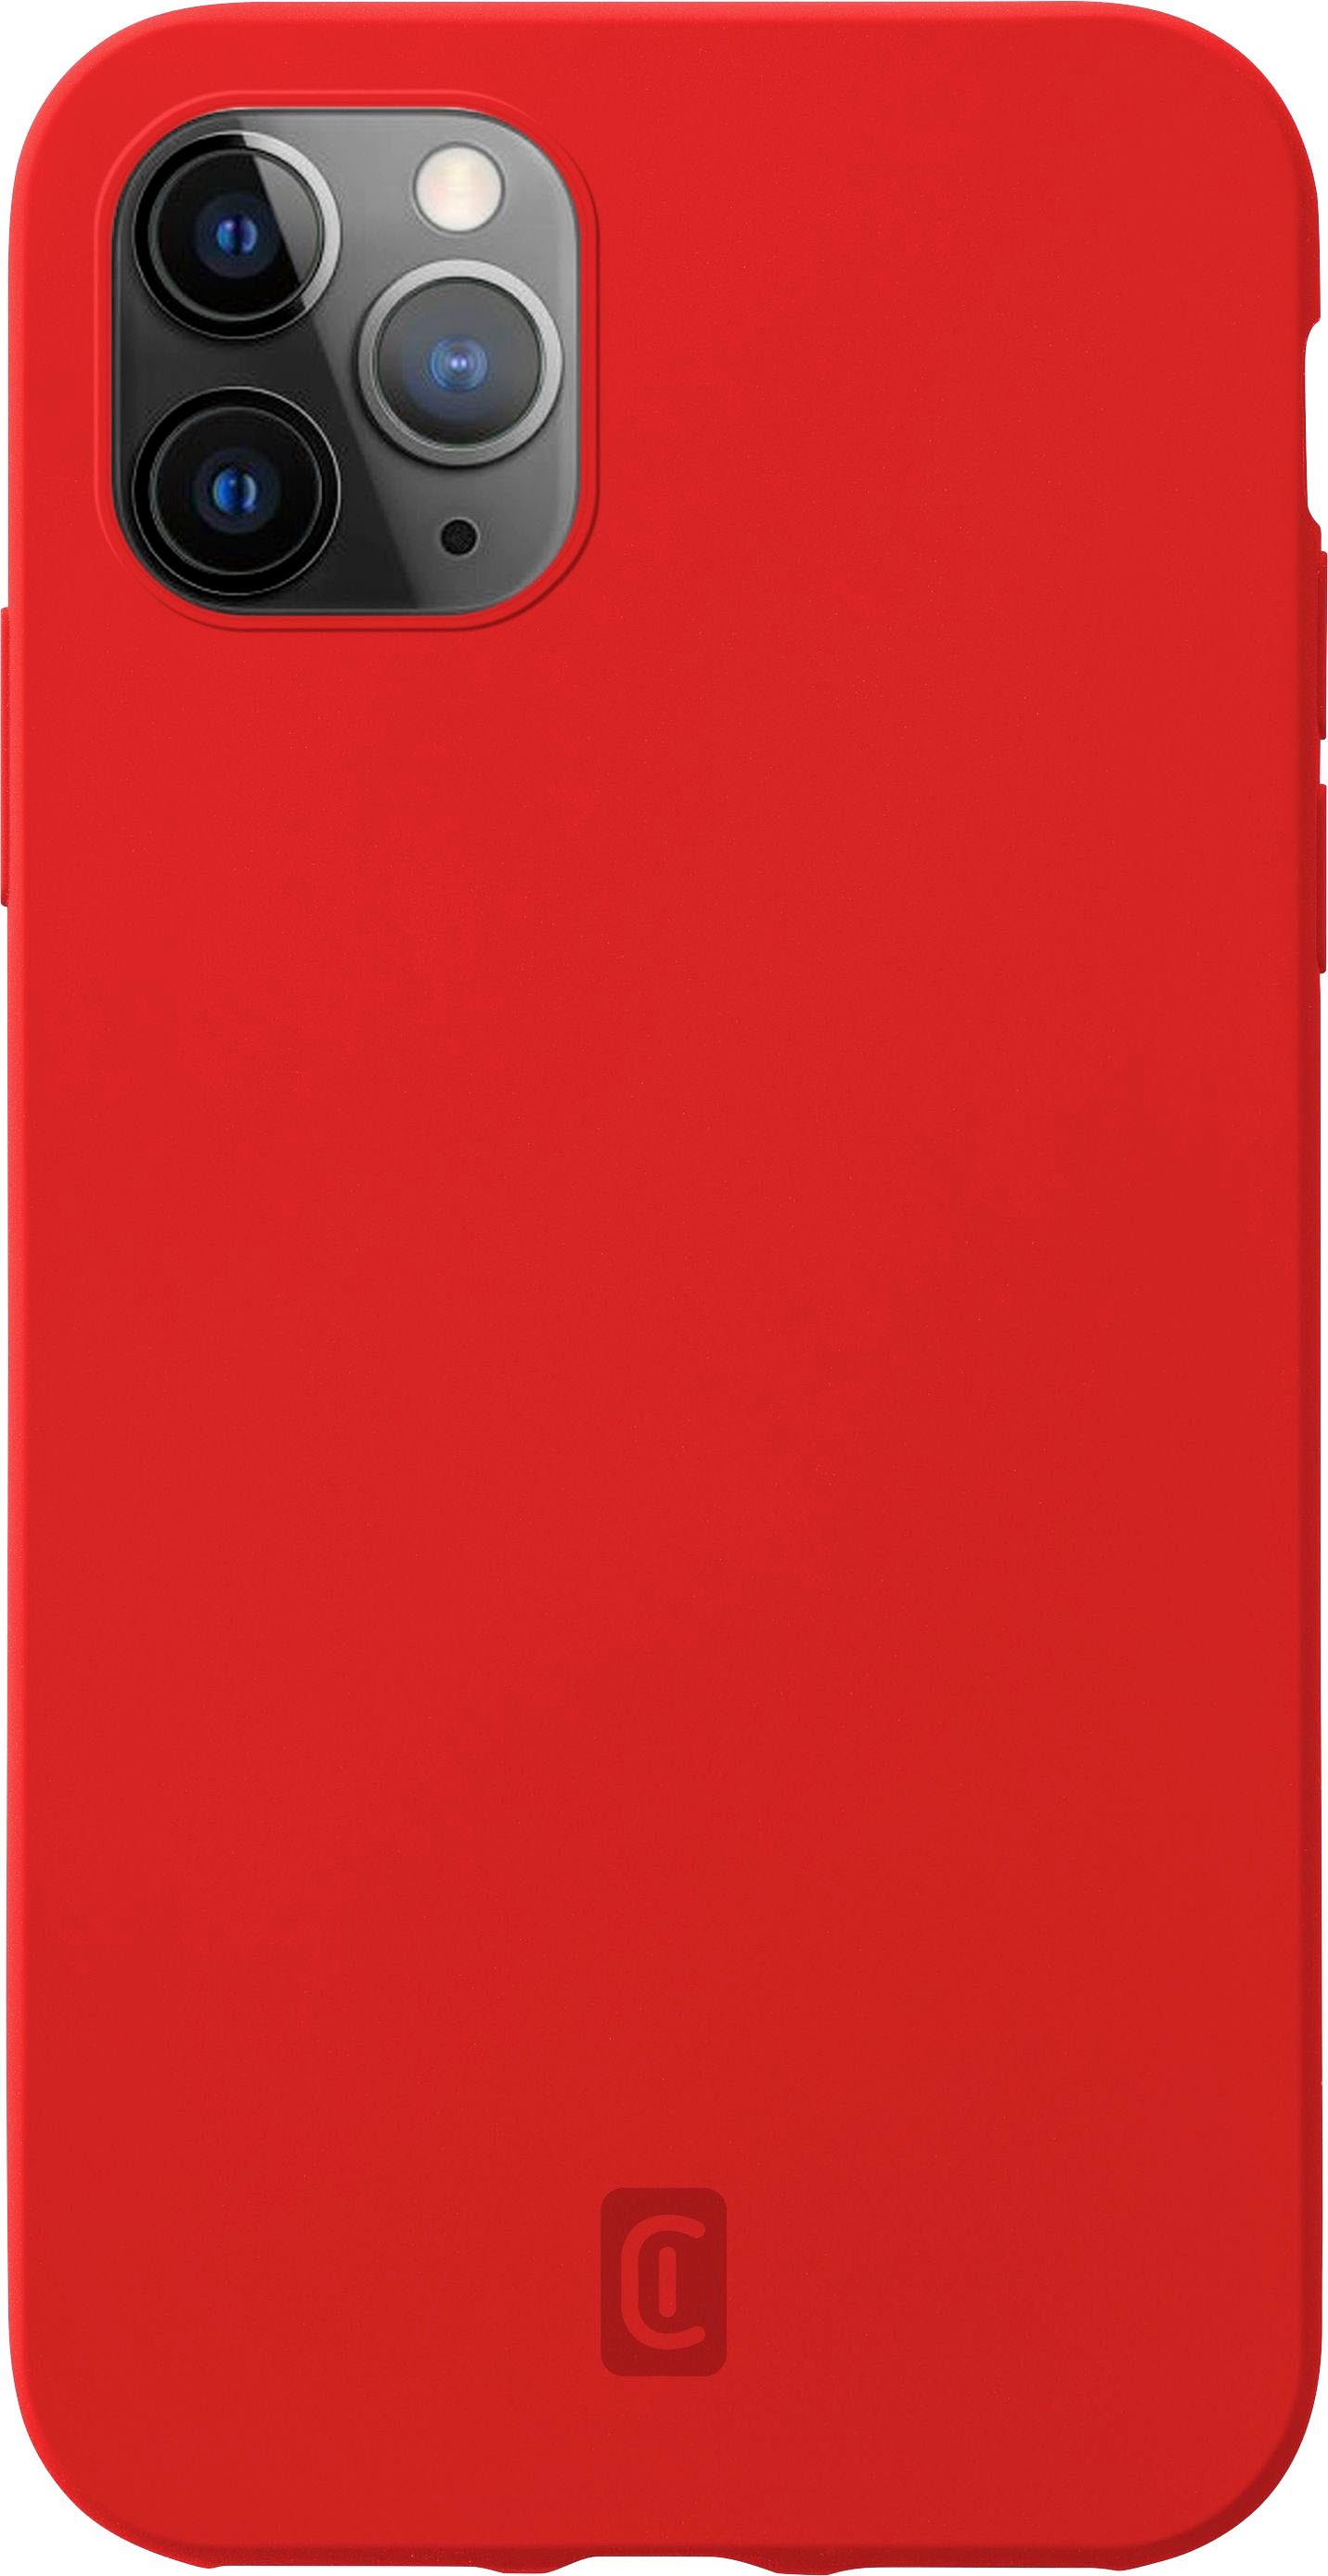 Cellularline View Cover »Sensation« iPhone 12 Pro Max 17 cm (6,7 Zoll)  online kaufen | OTTO